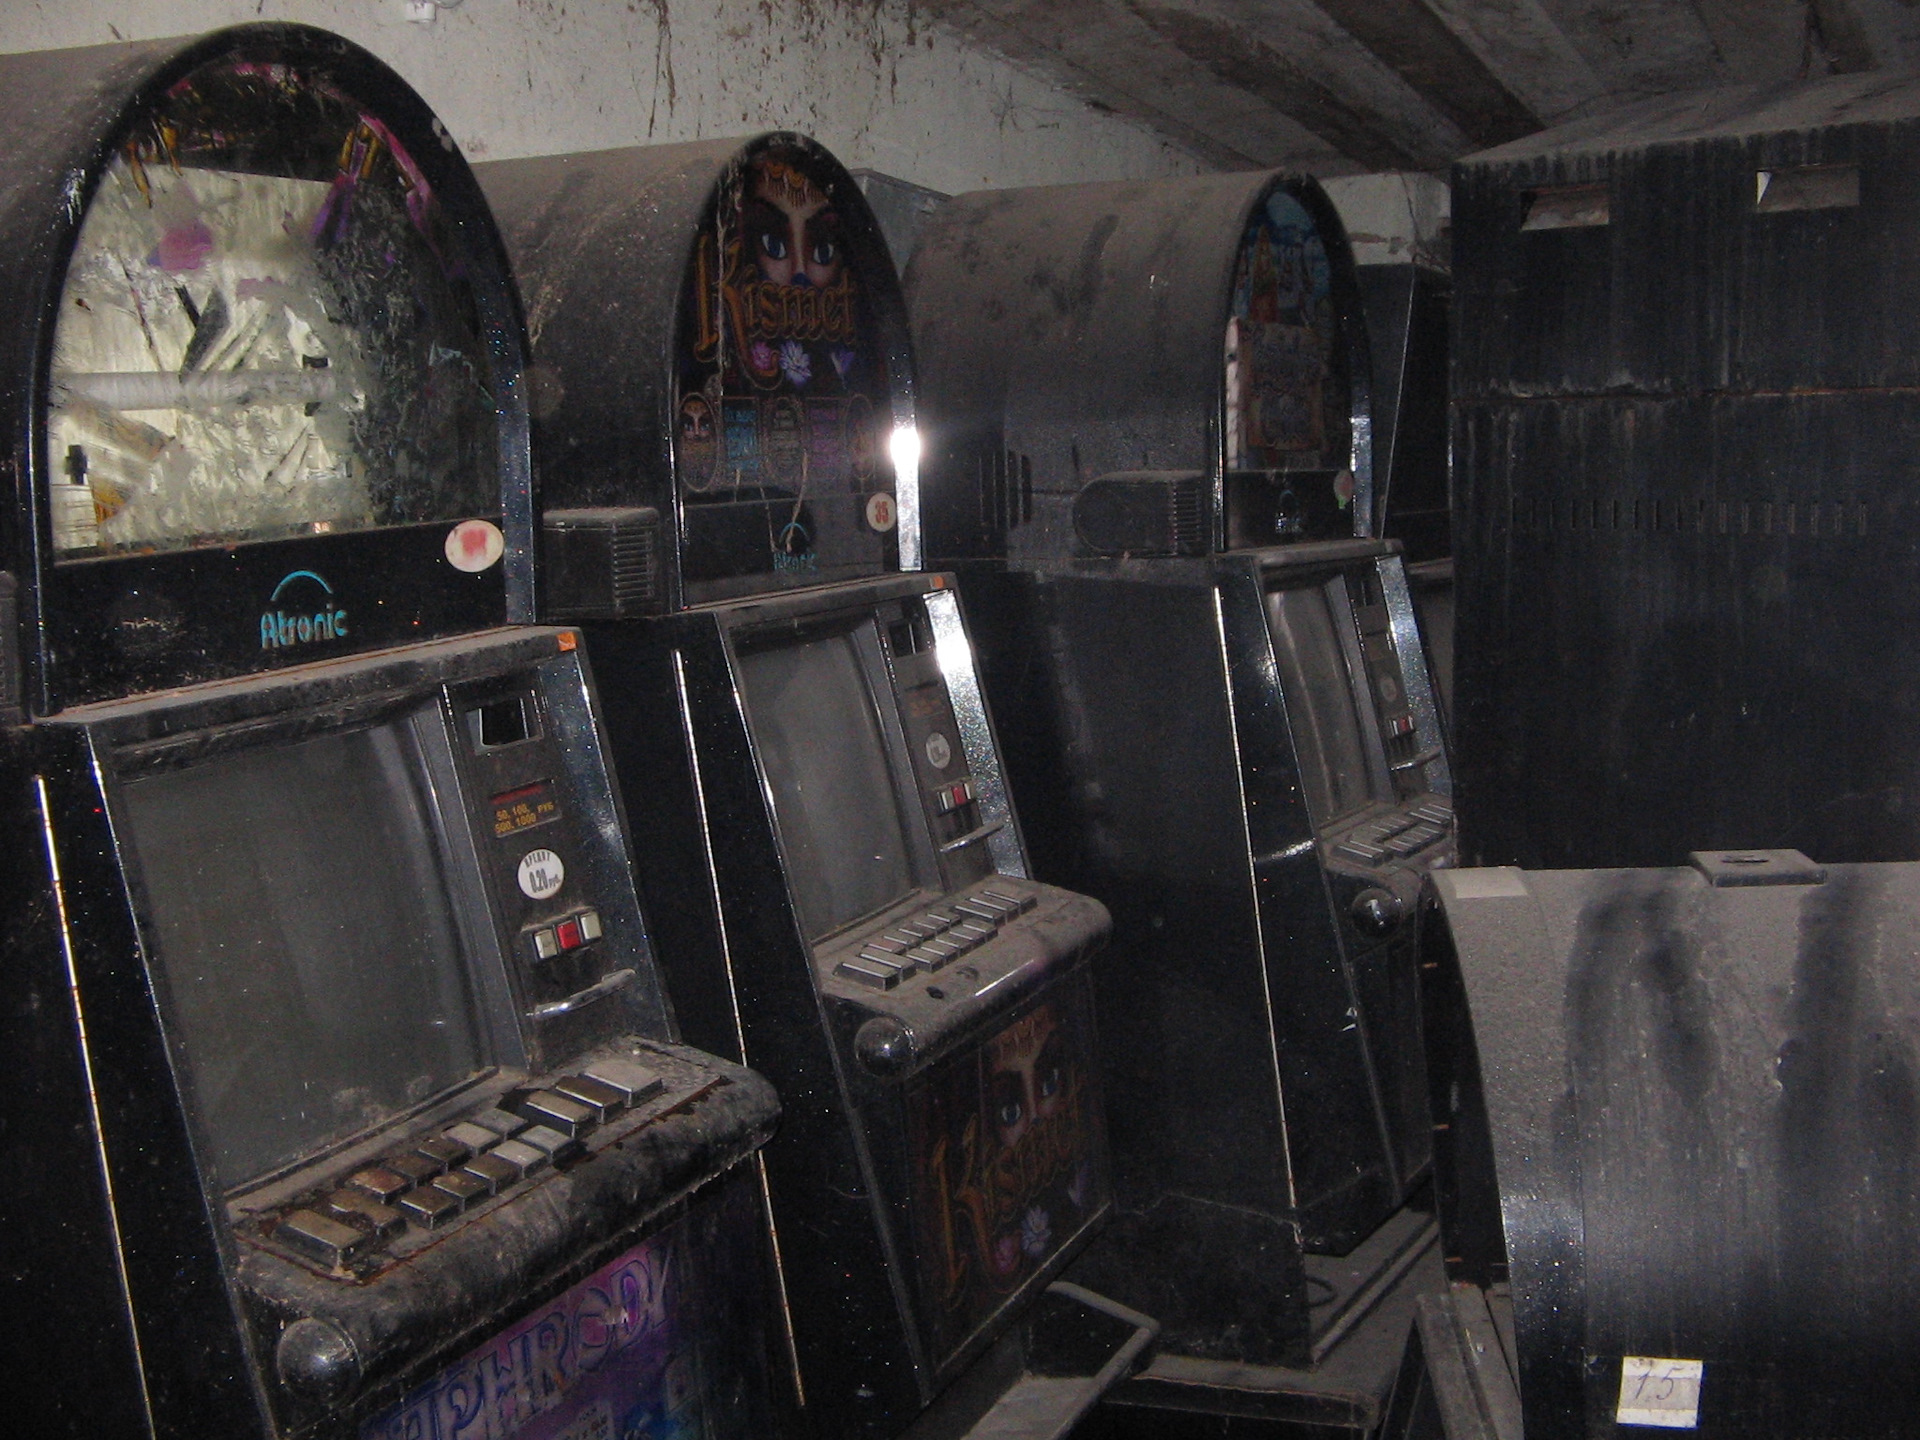 Игровые автоматы 90 е. Заброшенный игровой автомат. Заброшенный зал с игровыми автоматами. Заброшенные игровые аппараты. Игровые автоматы 90х.